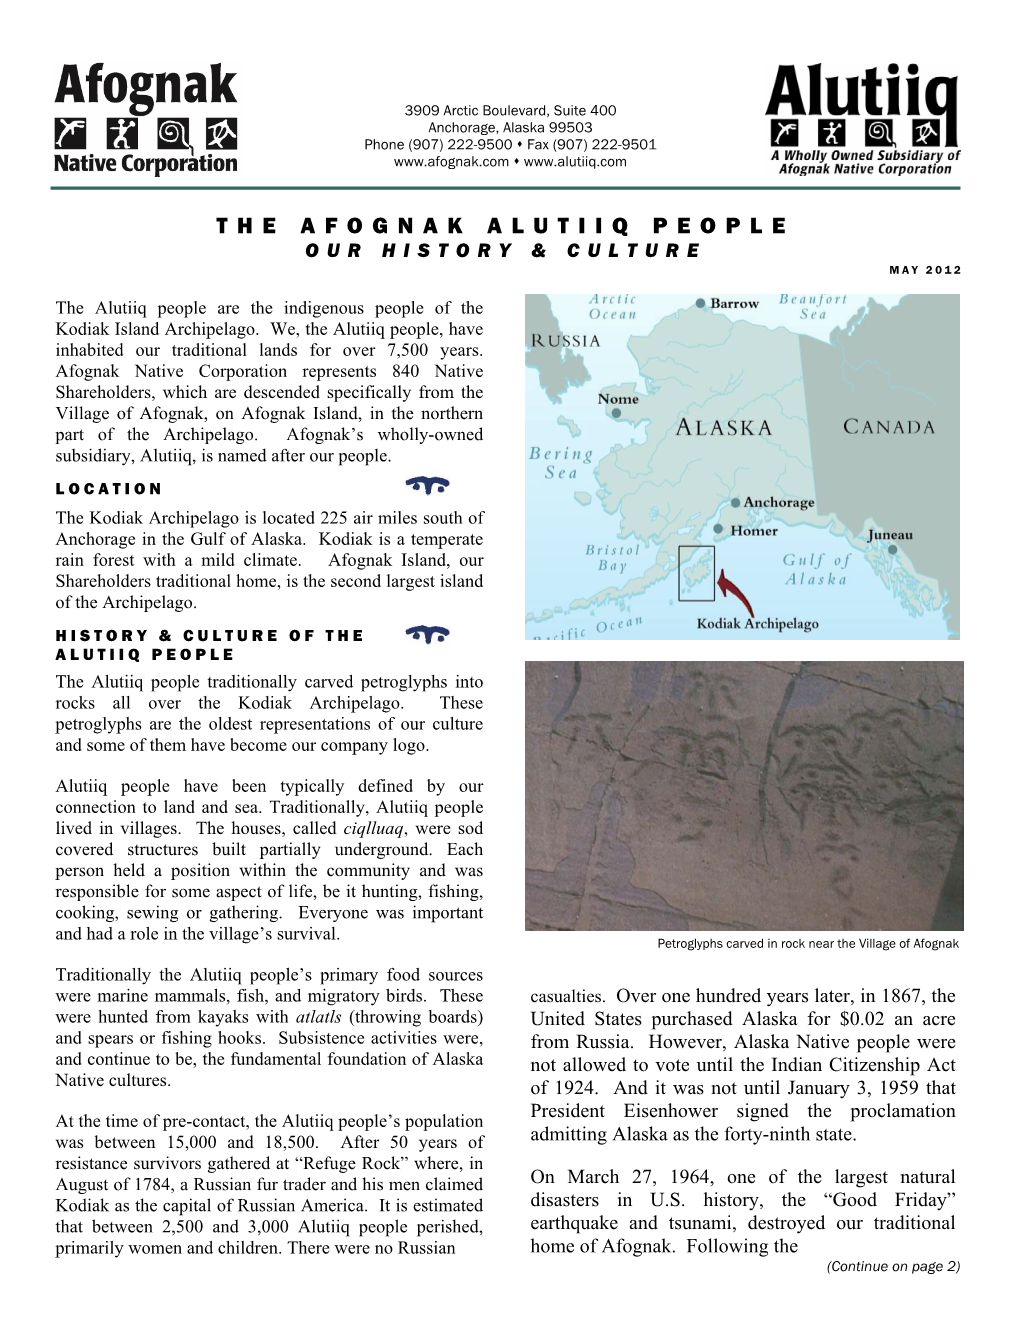 Afognak Alutiiq History 05-12